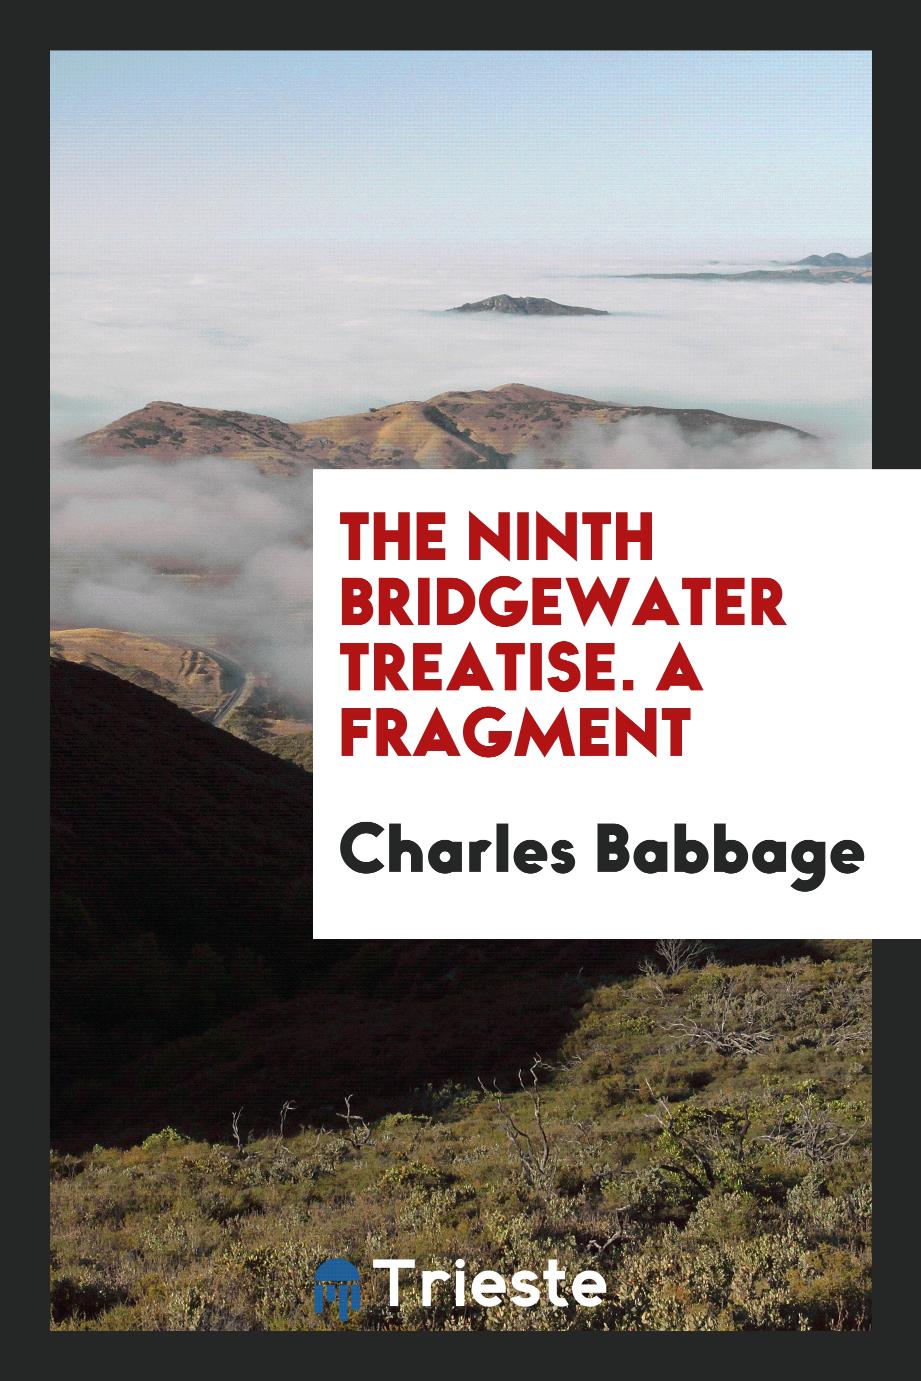 The ninth Bridgewater treatise. A fragment